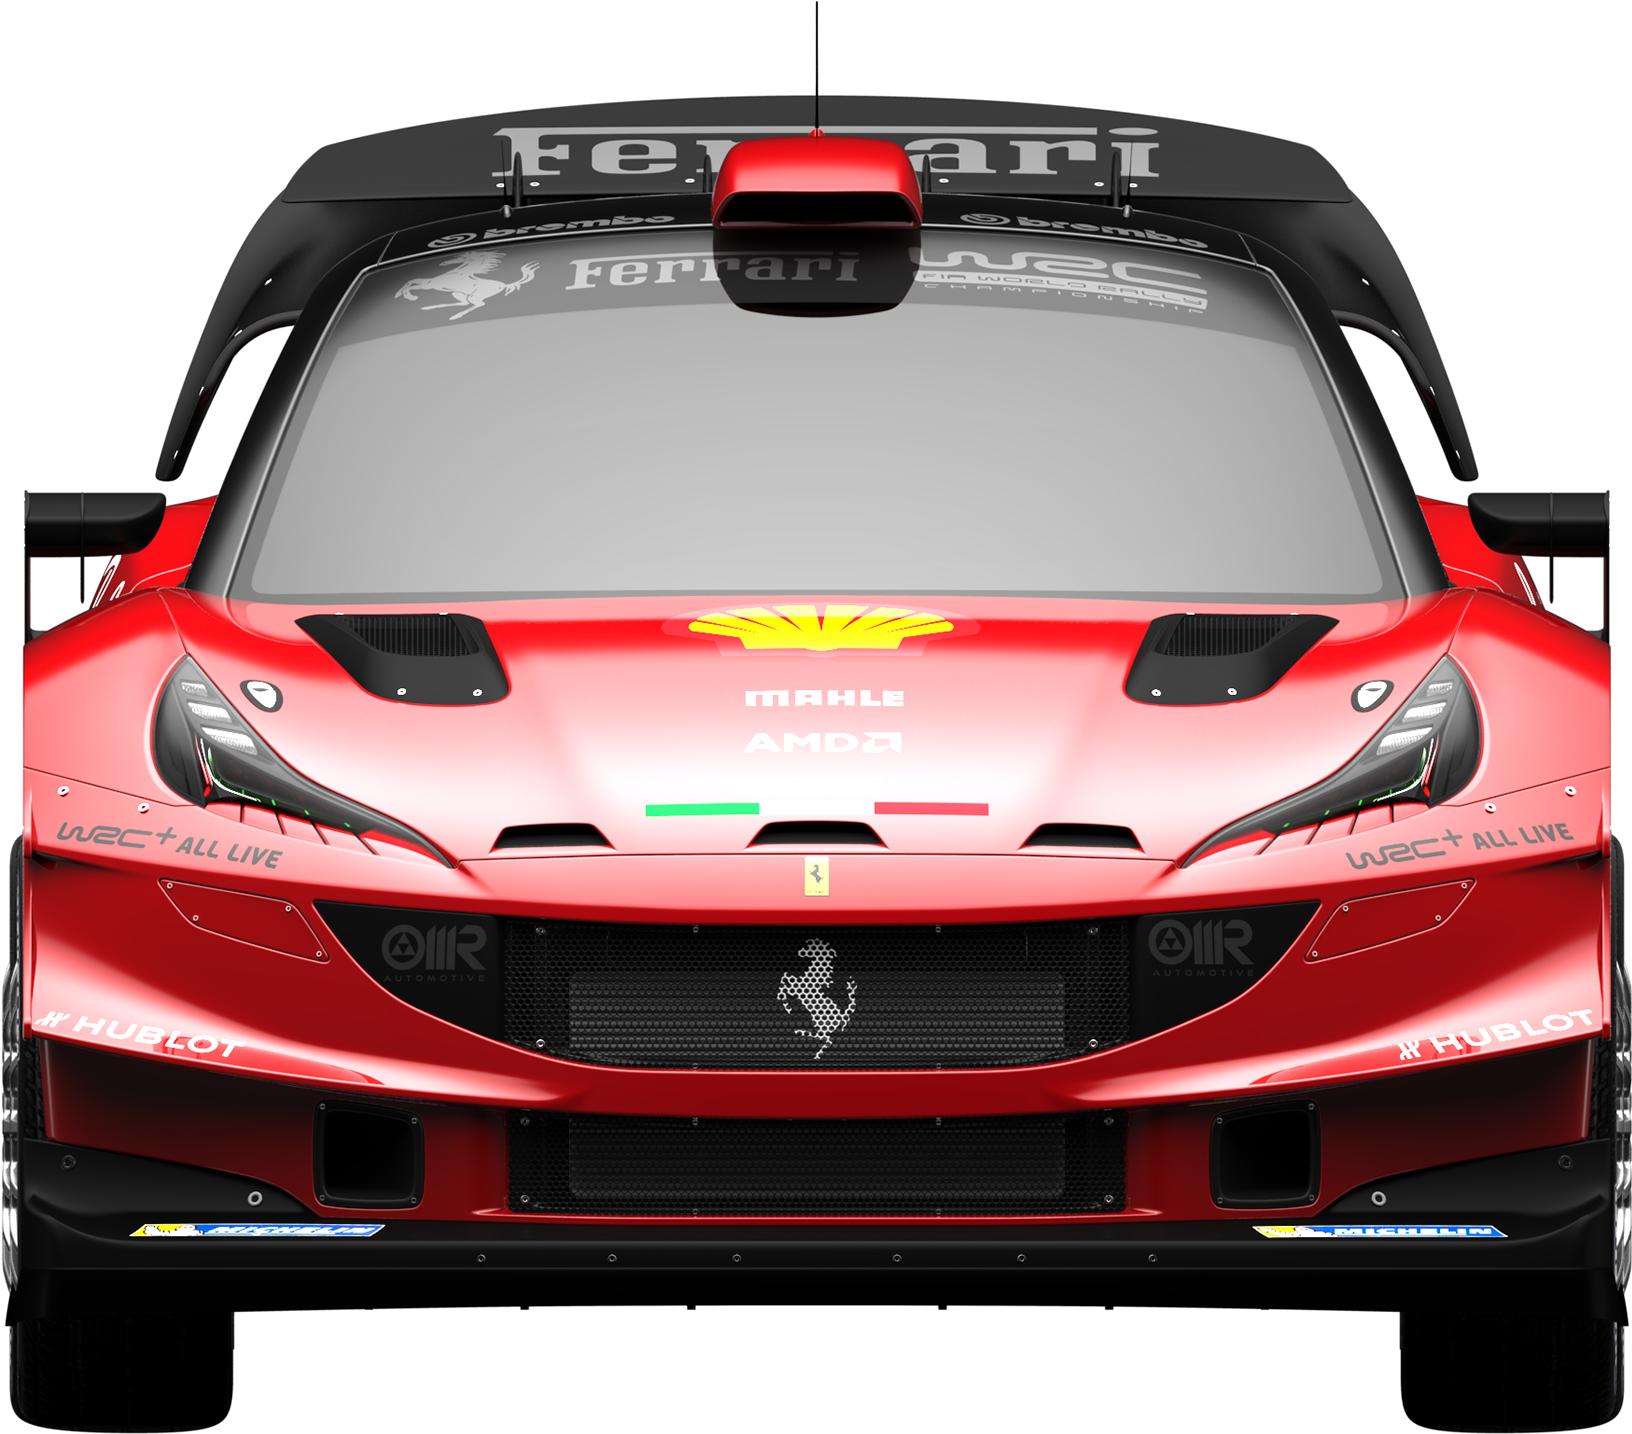 Red Ferrari Racecar Front View PNG image